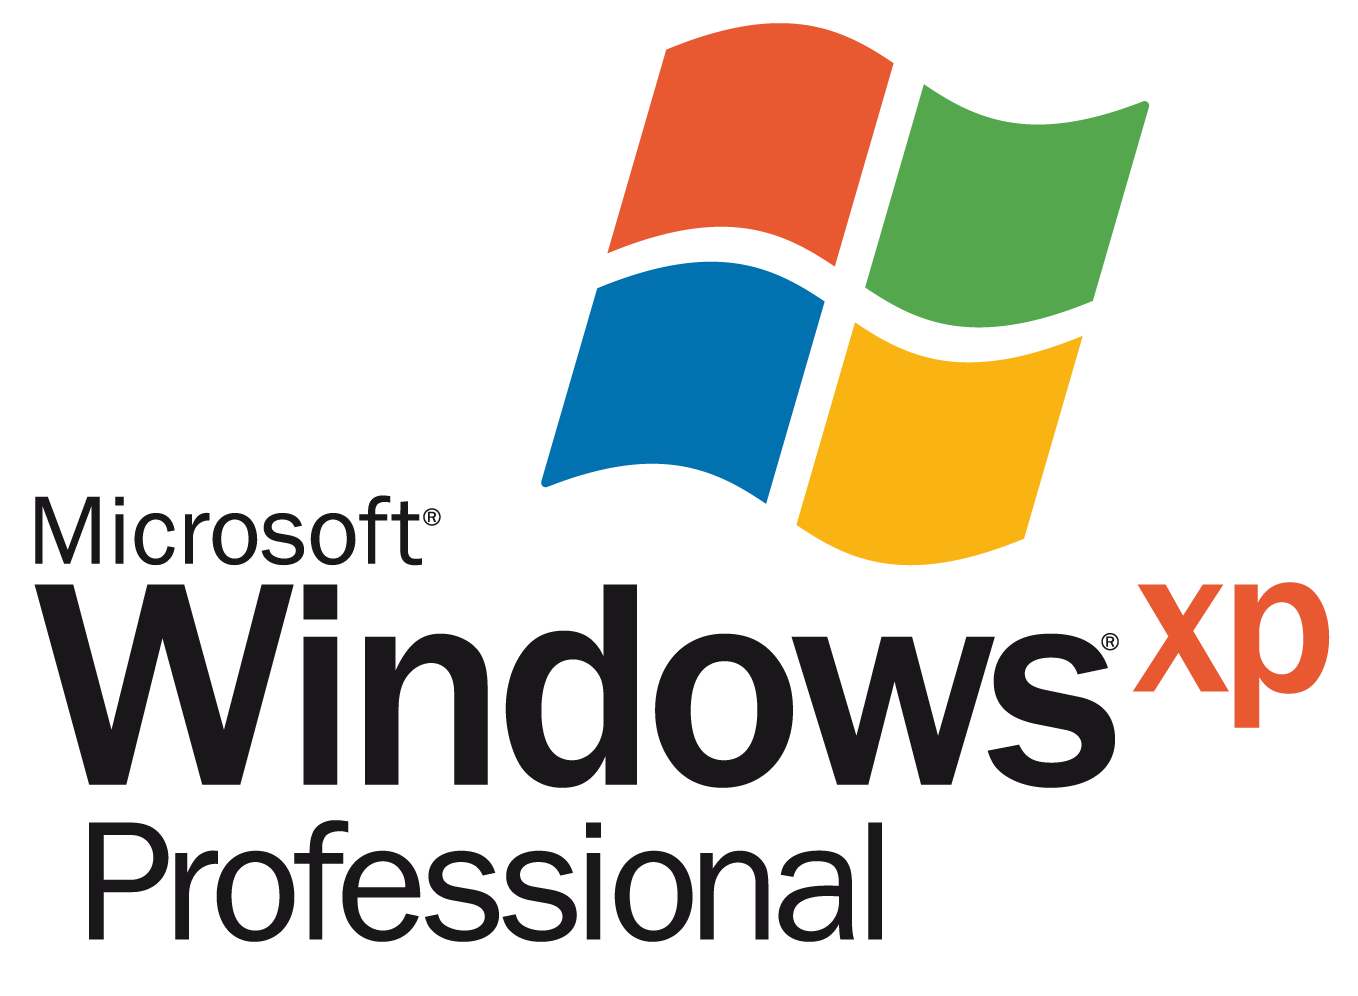 Windows XP SP3 Free Download - Filekiwi.com